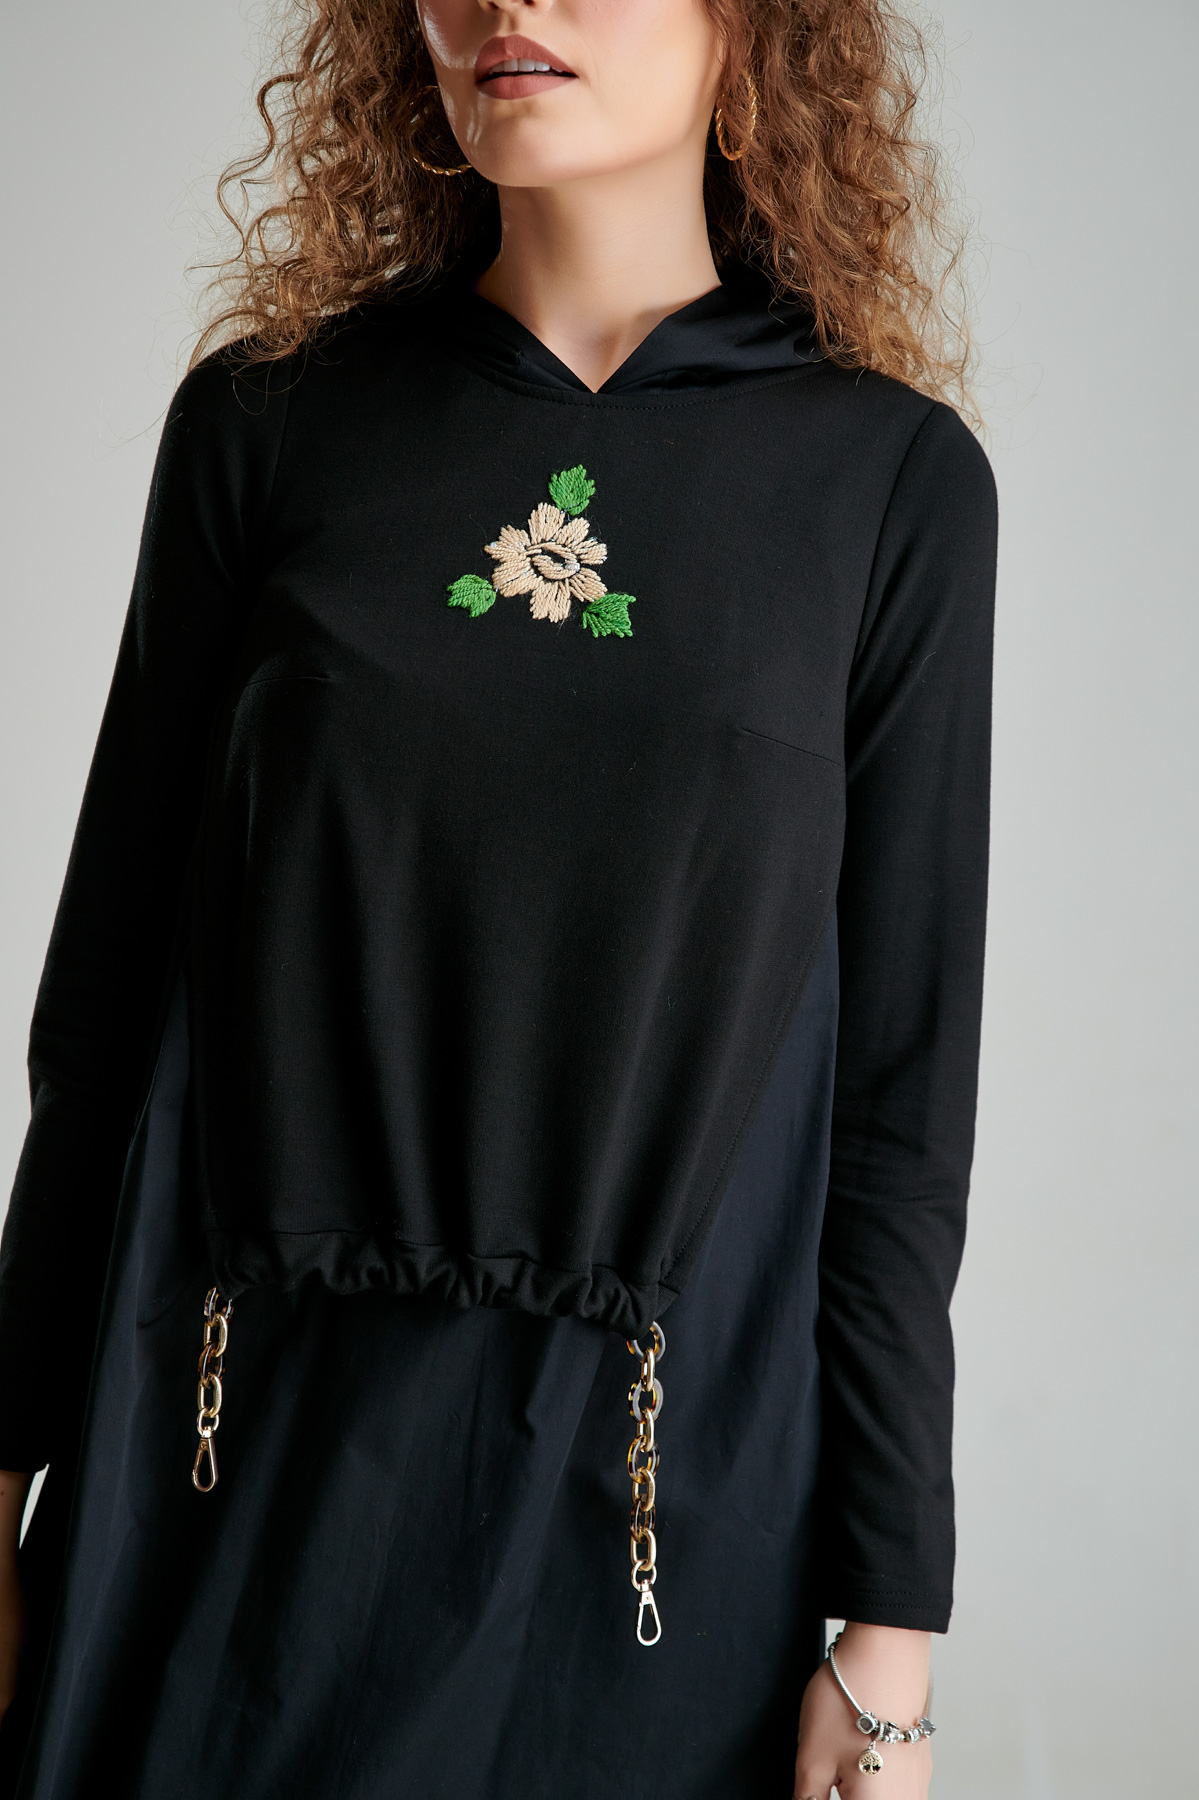 INDRA casual dress in black poplin and punto roma. Natural fabrics, original design, handmade embroidery